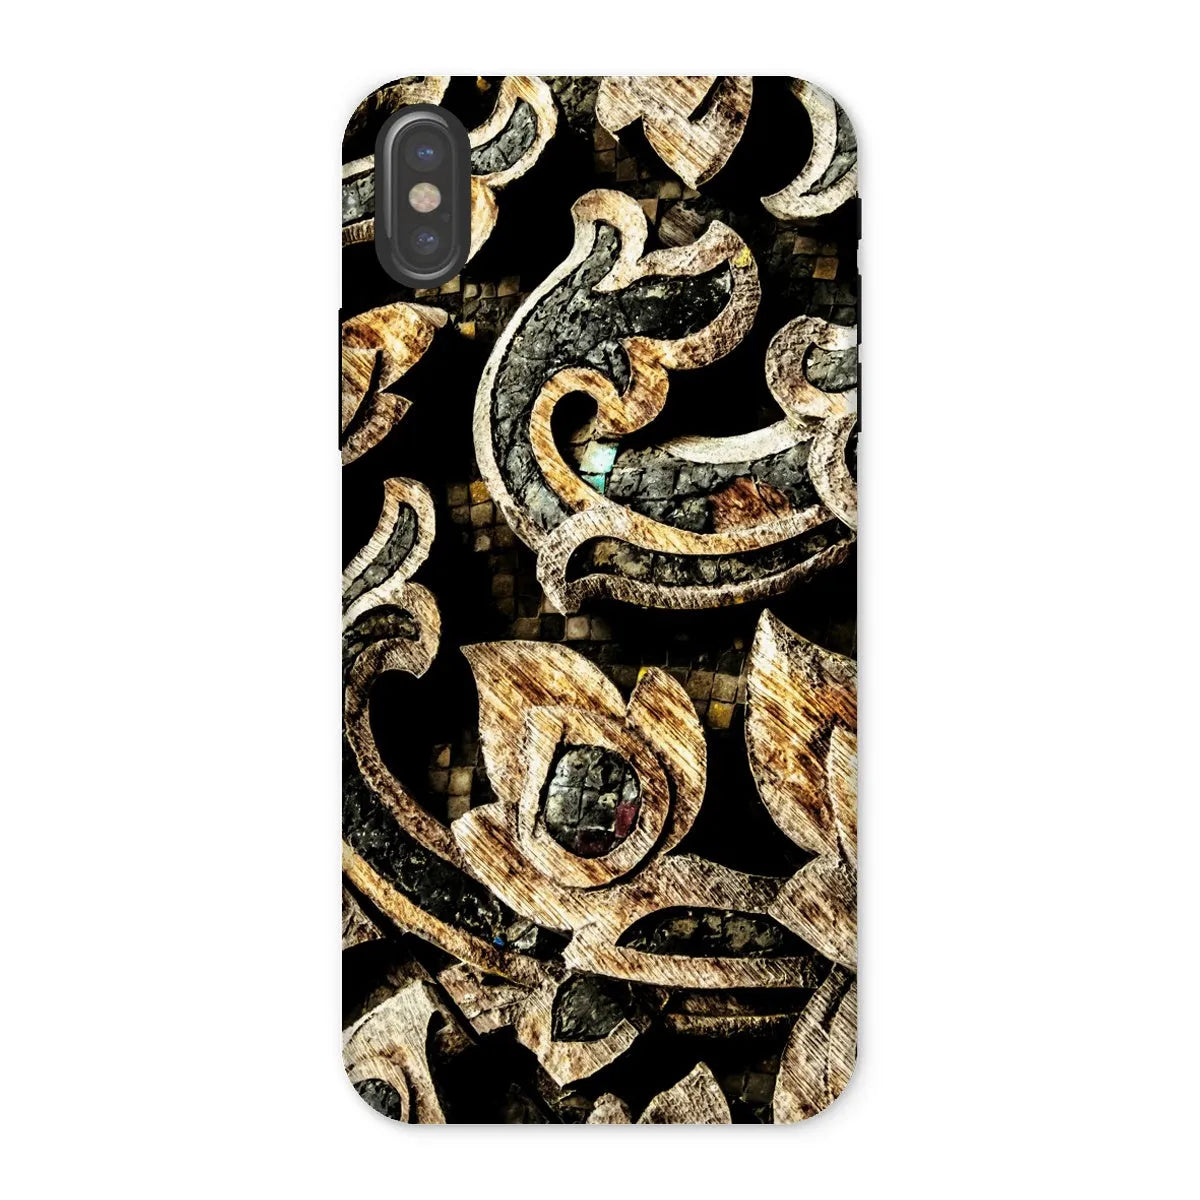 Against The Grain Tough Phone Case - Iphone x / Matte - Mobile Phone Cases - Aesthetic Art